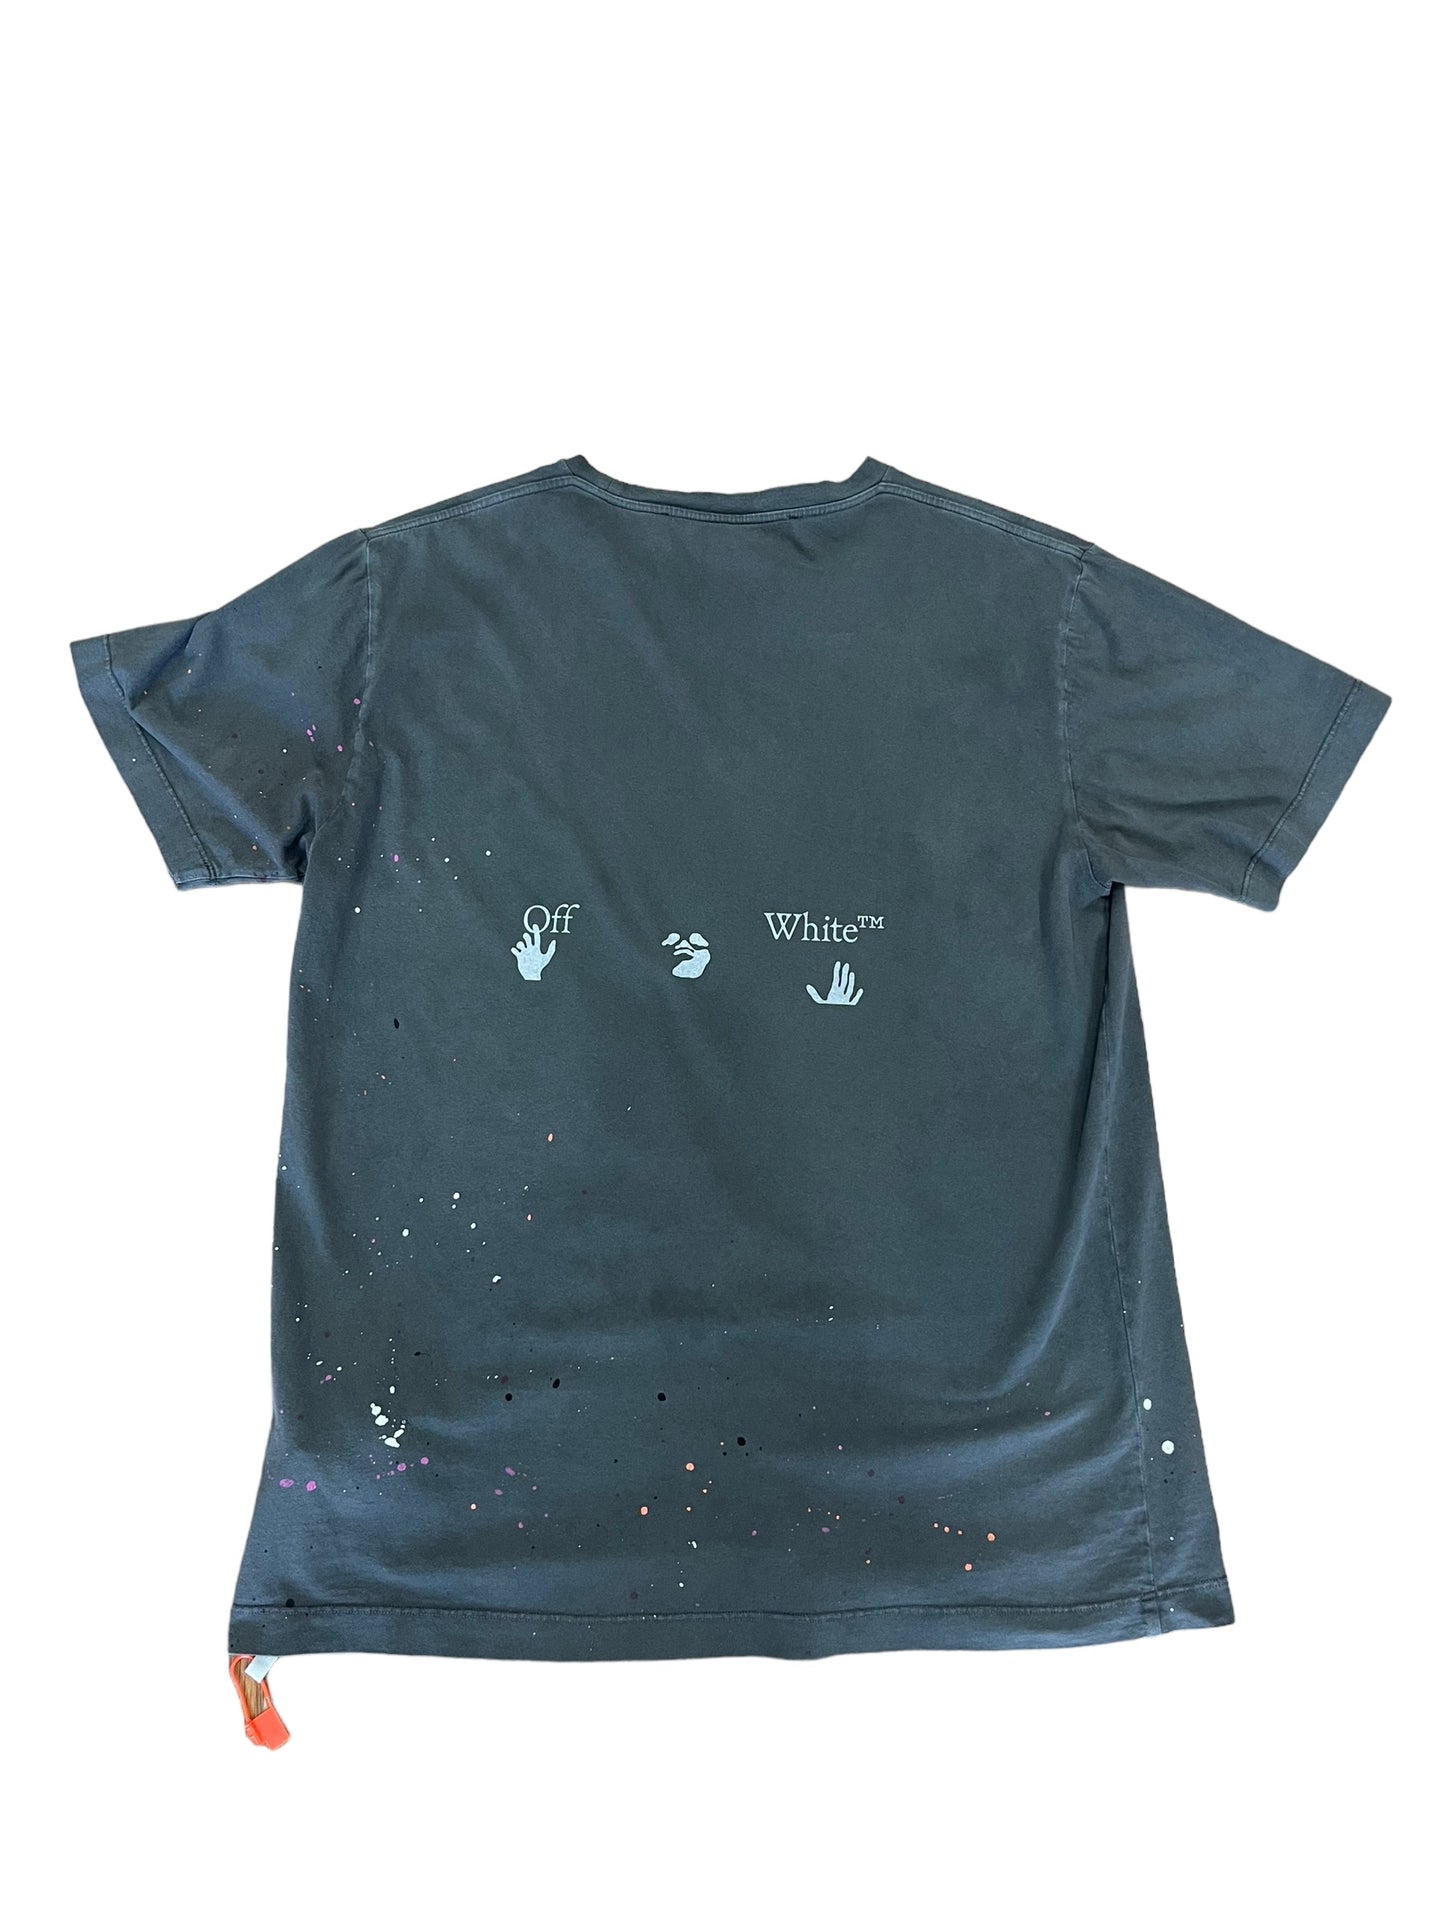 OFF-WHITE Paint Splatter Print T-Shirt Khaki Brown Size L